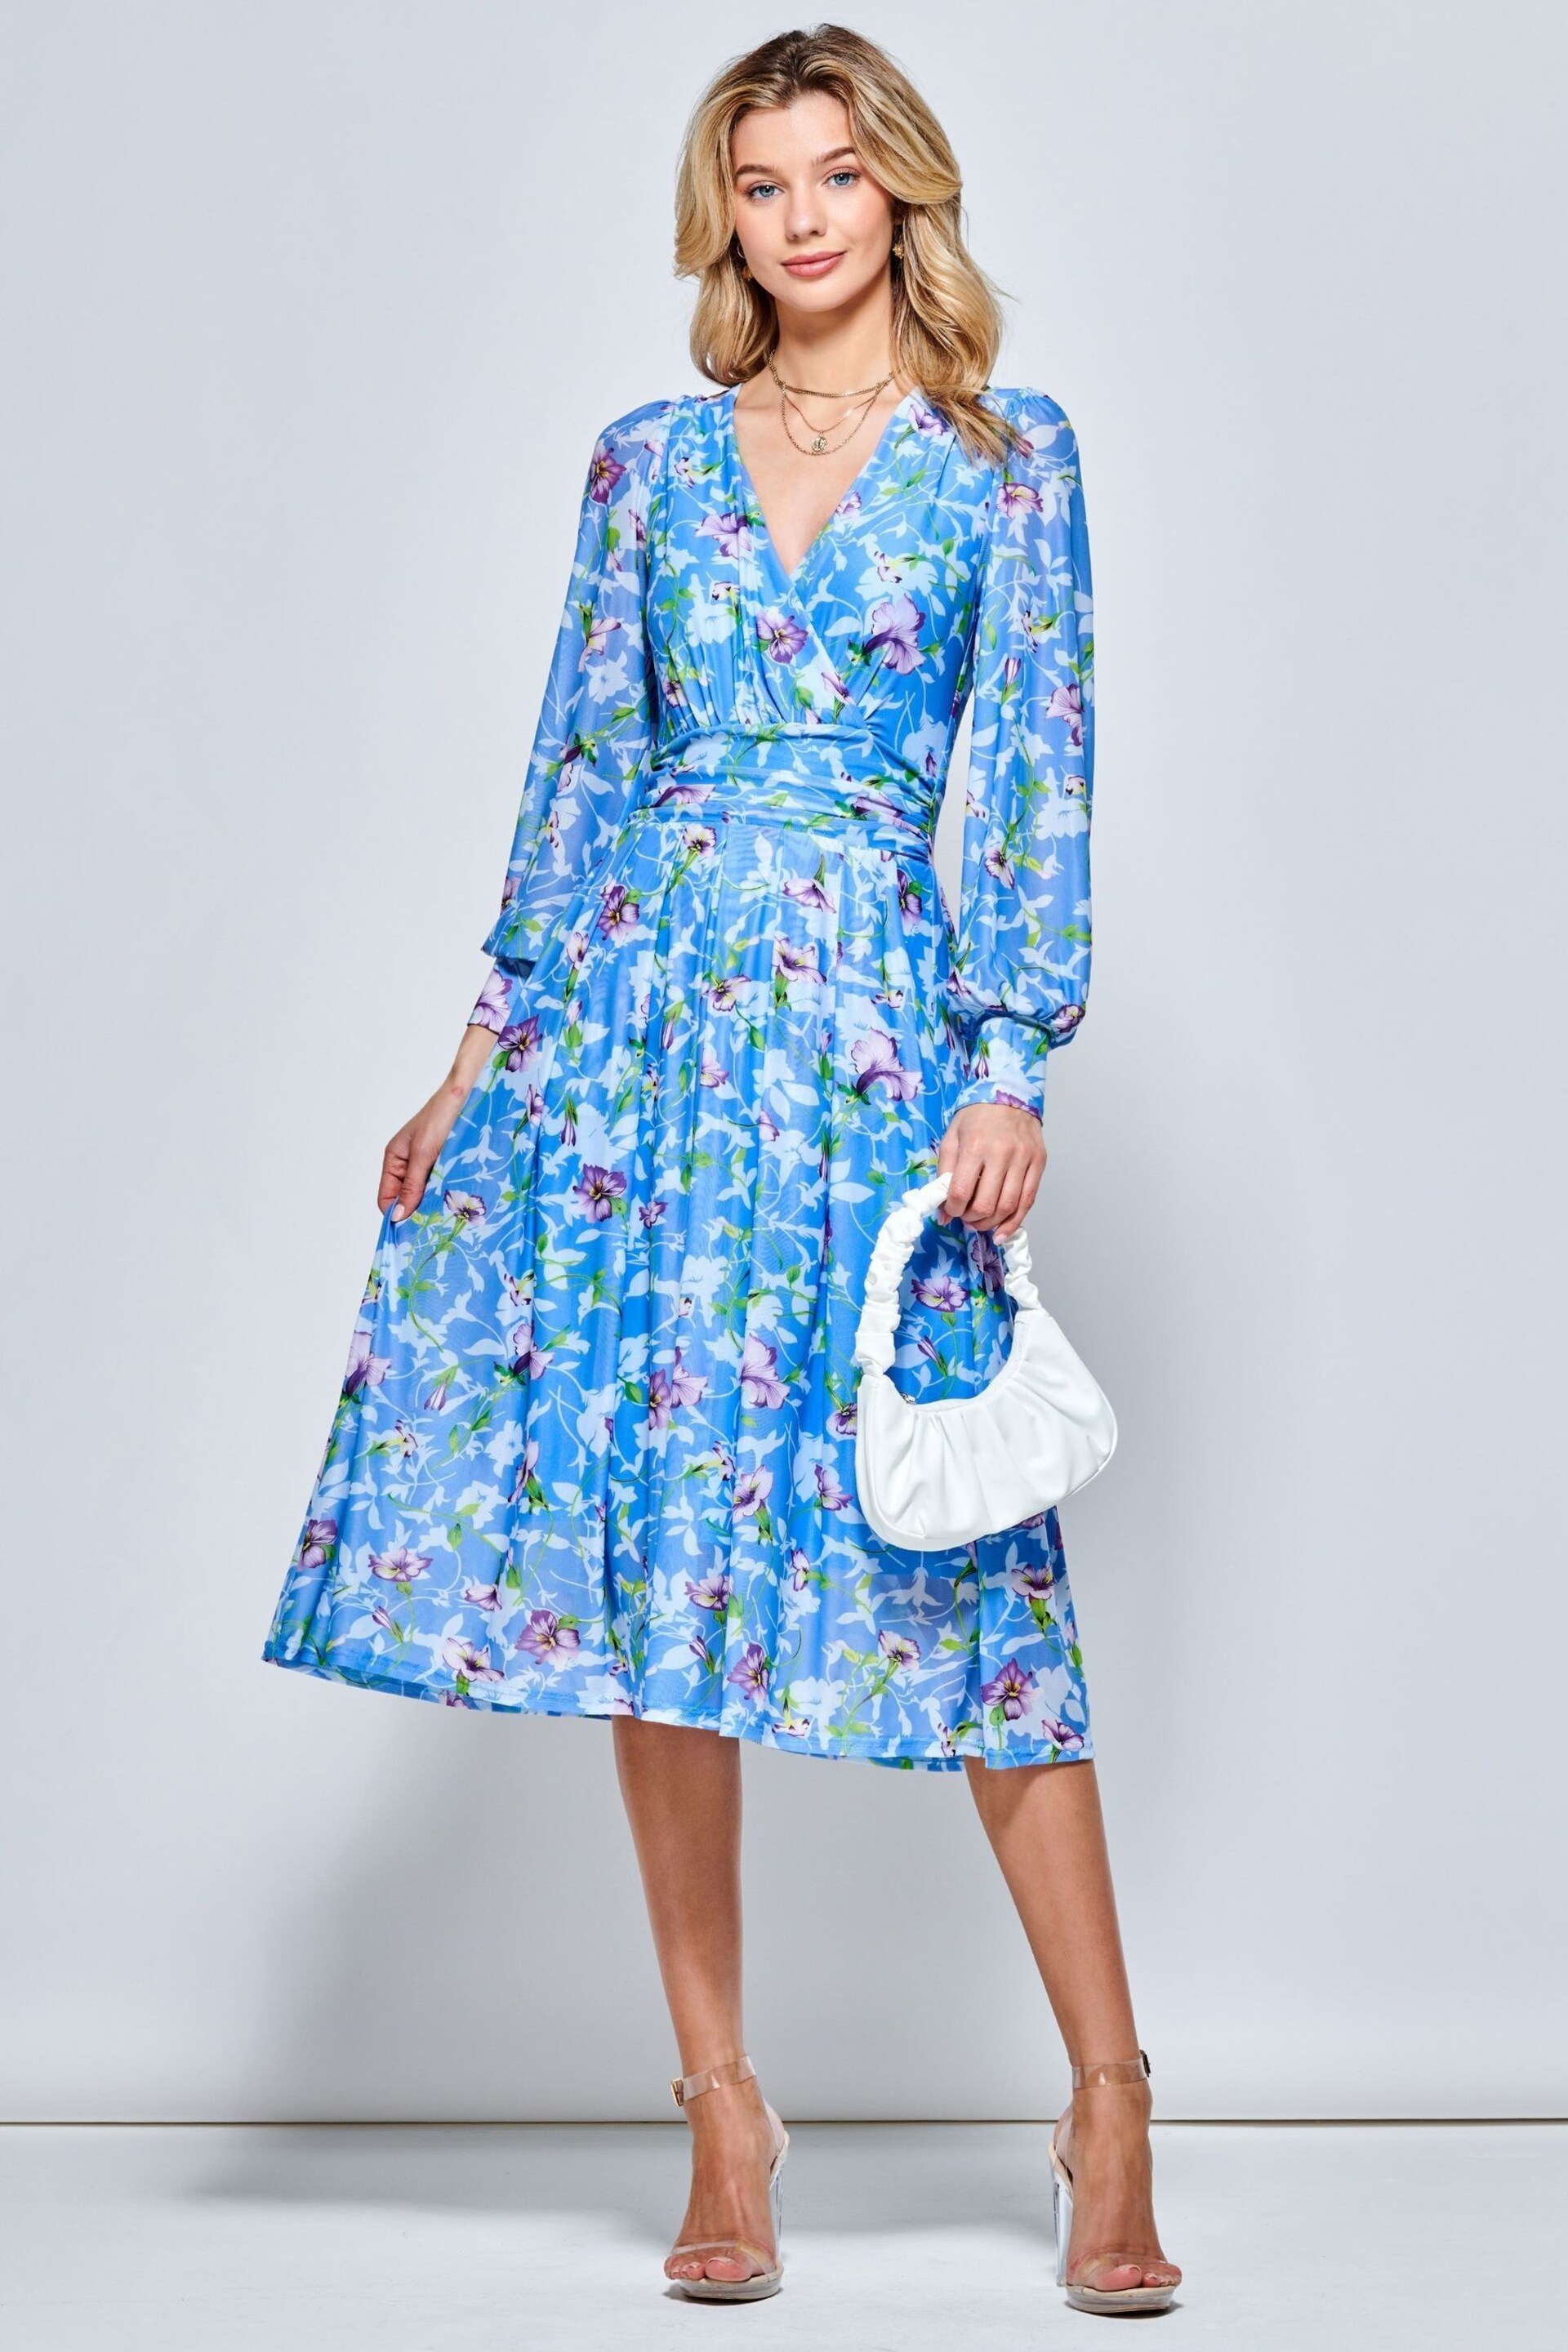 Jolie Moi Light Blue Floral Long Sleeve Mesh Midi Dress - Image 1 of 5